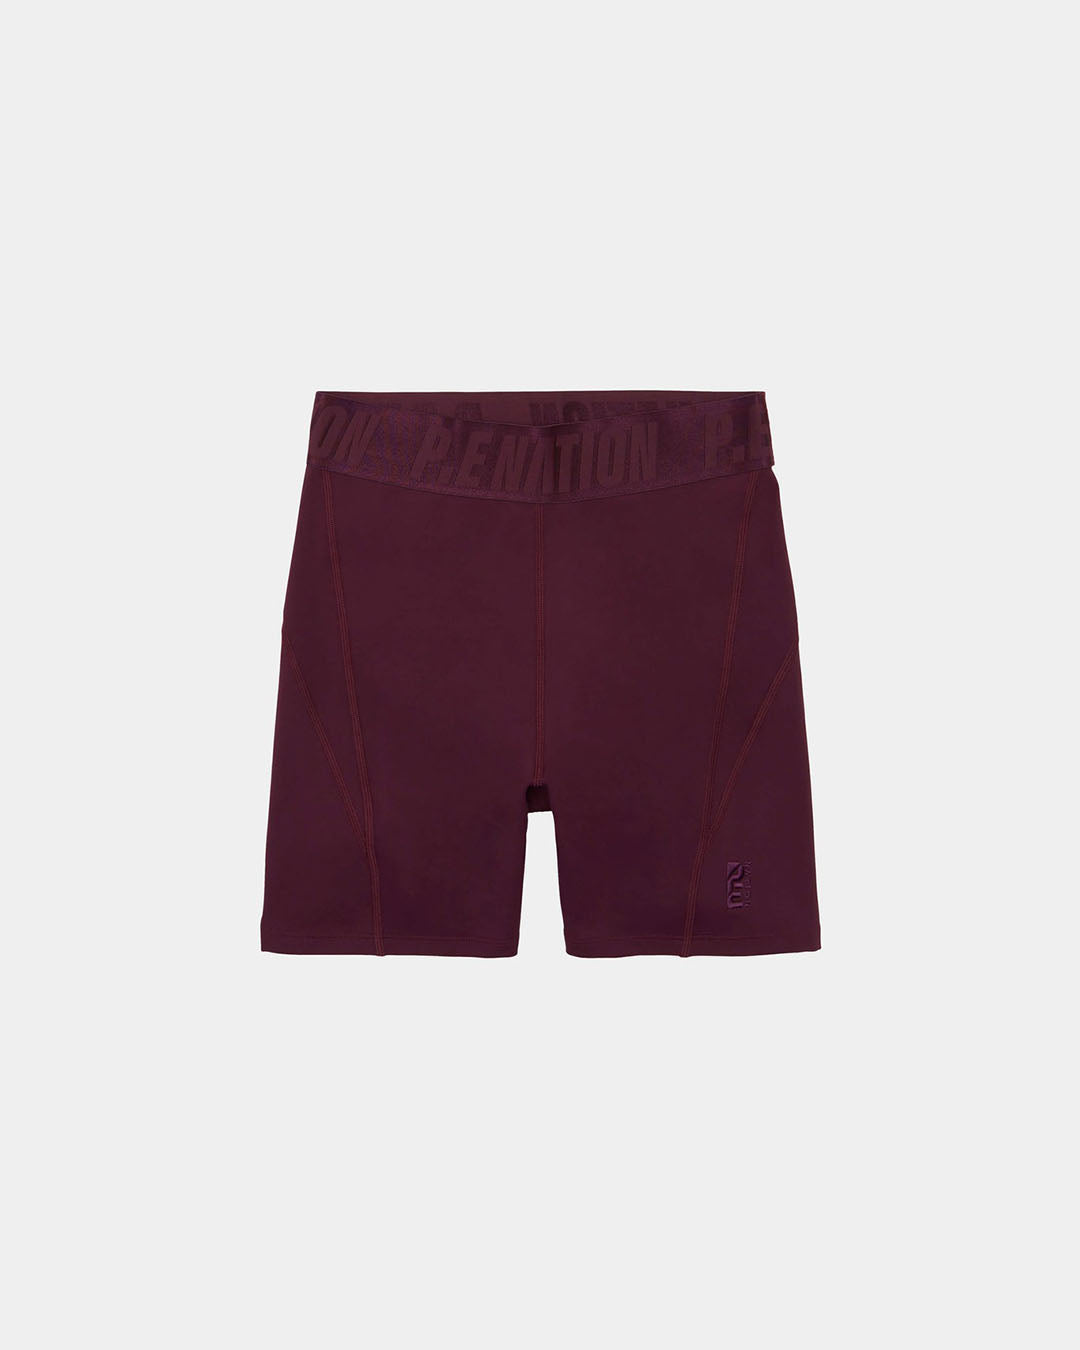 Backcheck Bike Short in Potent Purple Shorts by PE Nation - Prae Store